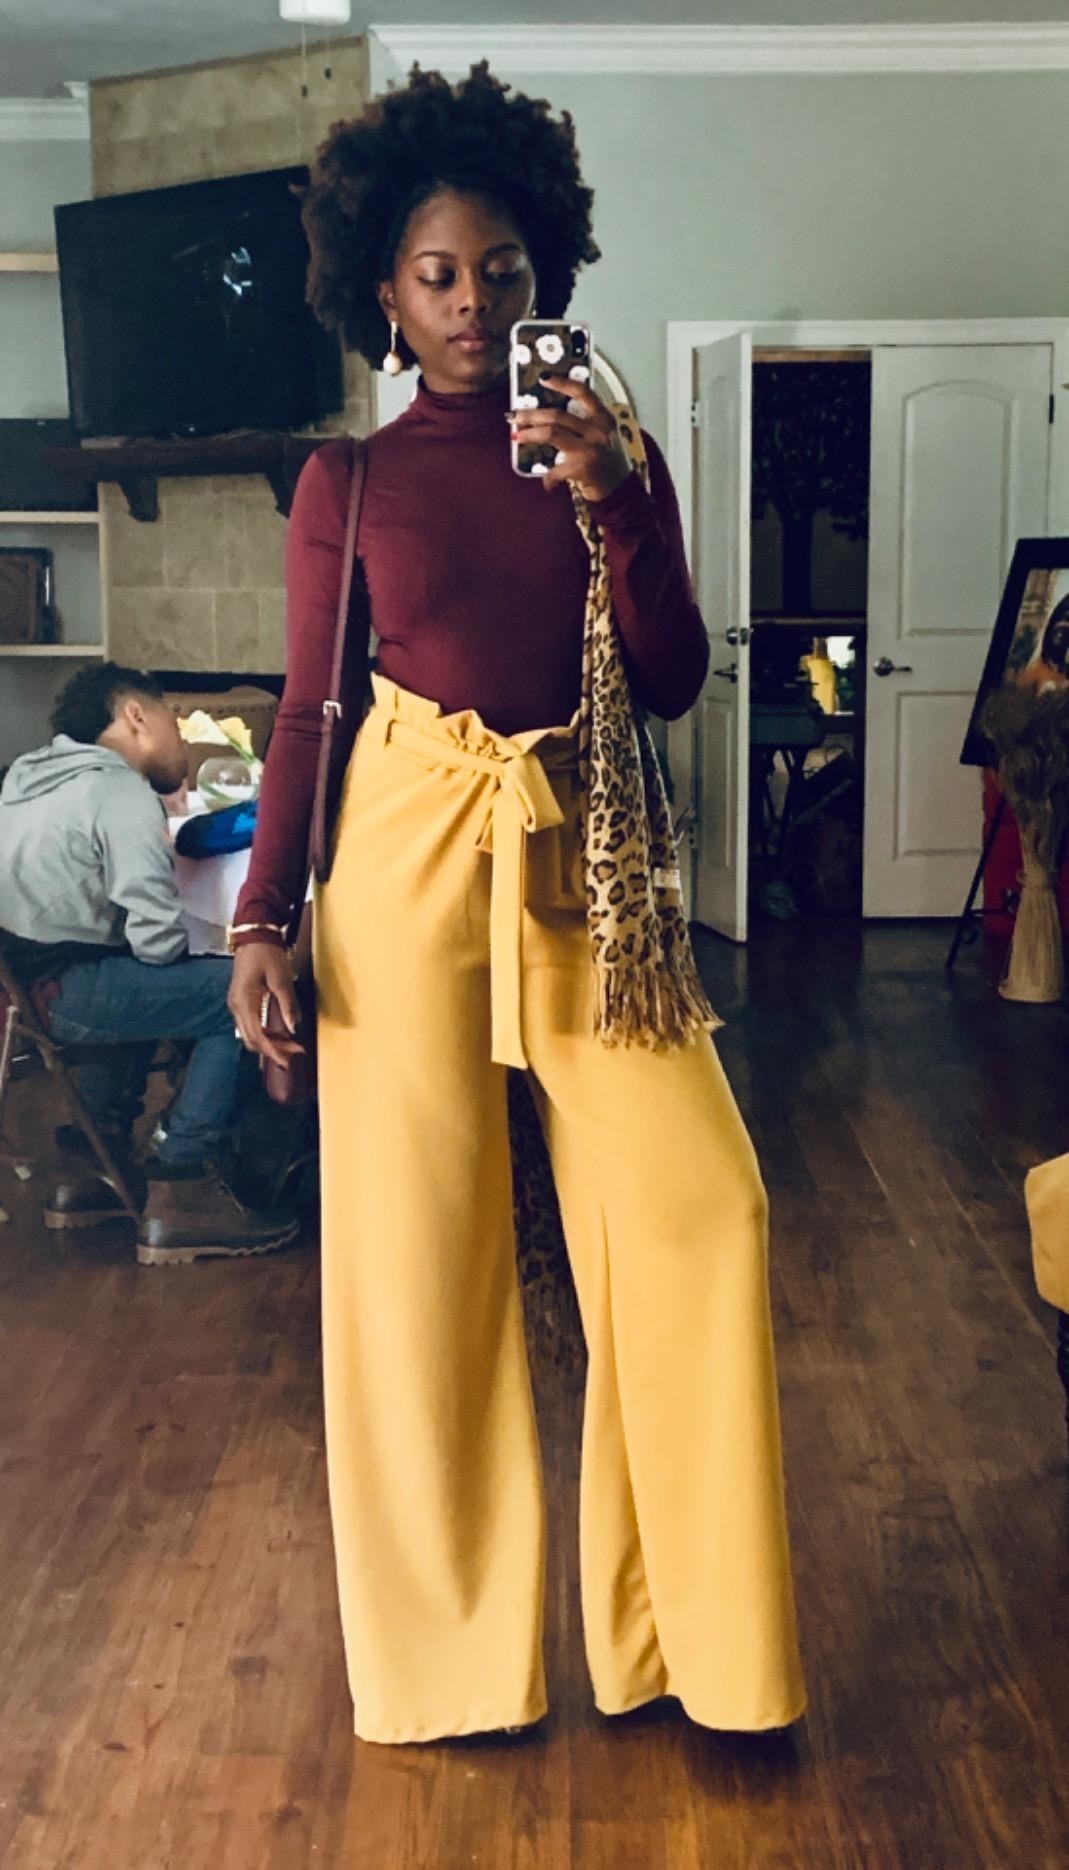 reviewer mirror selfie wearing the pants in yellow